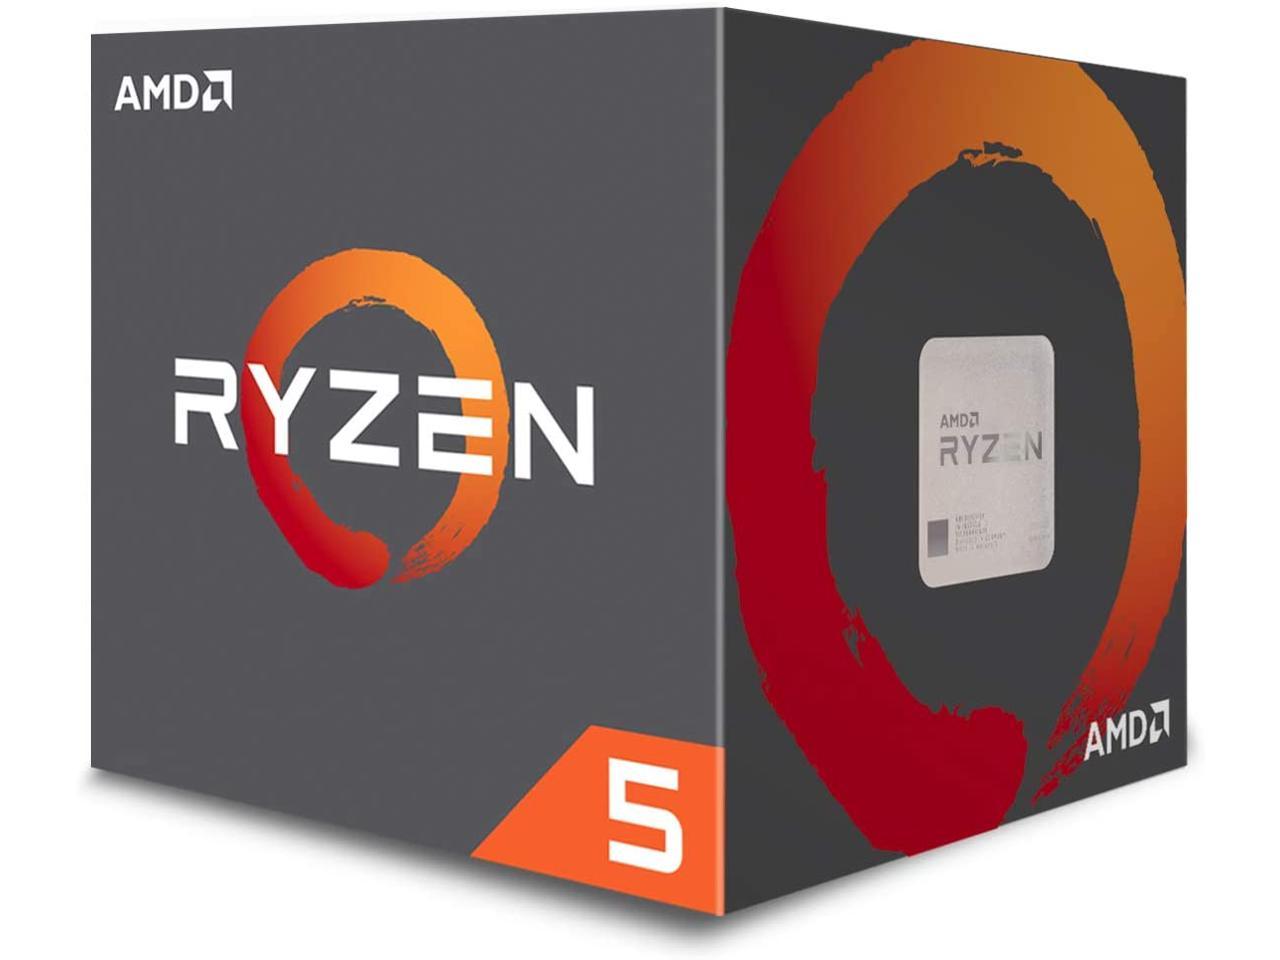 AMD Desktop Ryzen 5 1600 65W AM4 Processor with Wraith Stealth Cooler